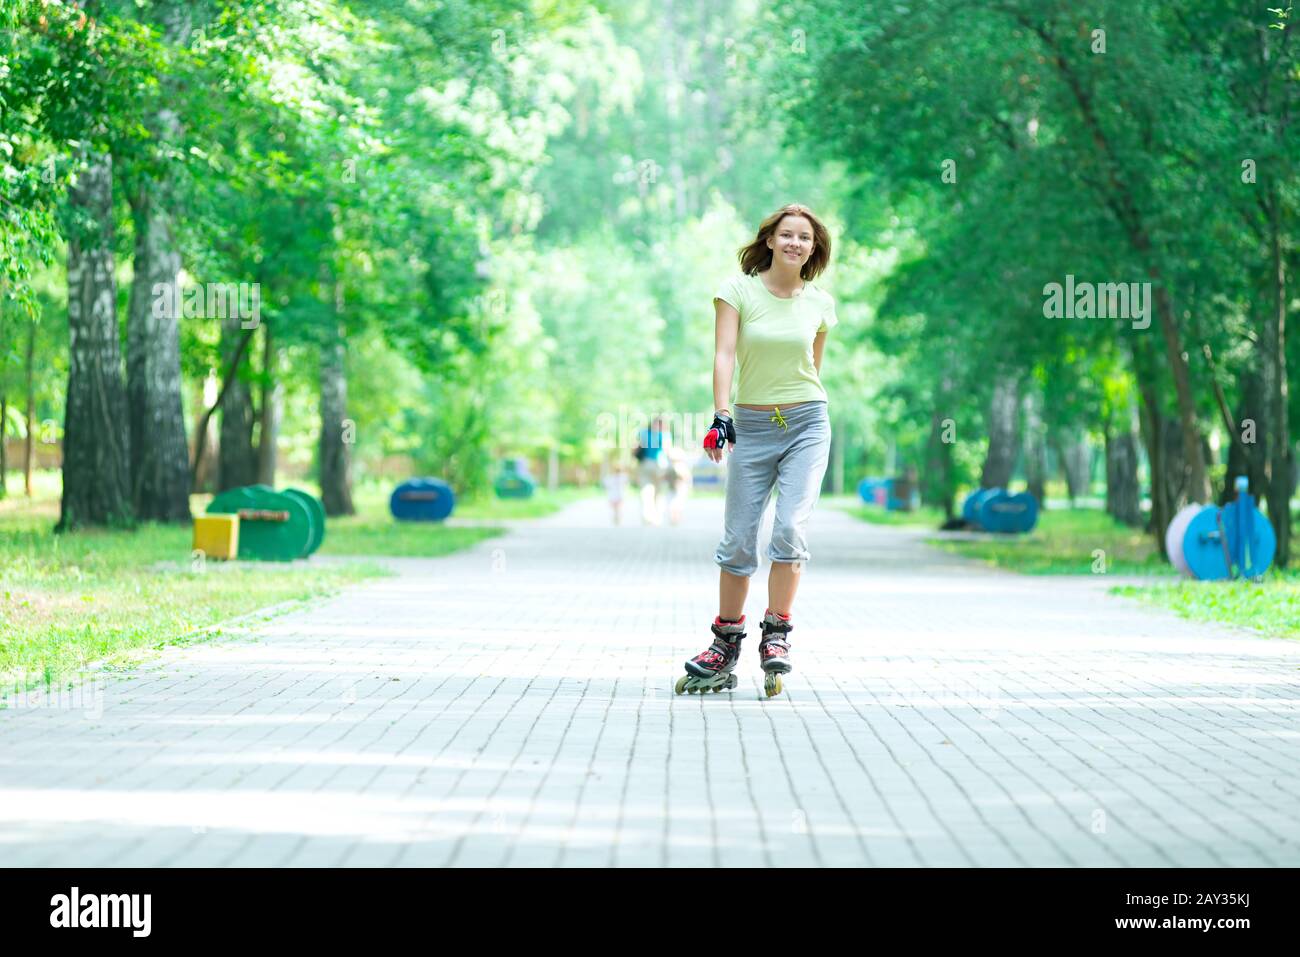 Roller skating sporty girl in park rollerblading on inline skate Stock Photo